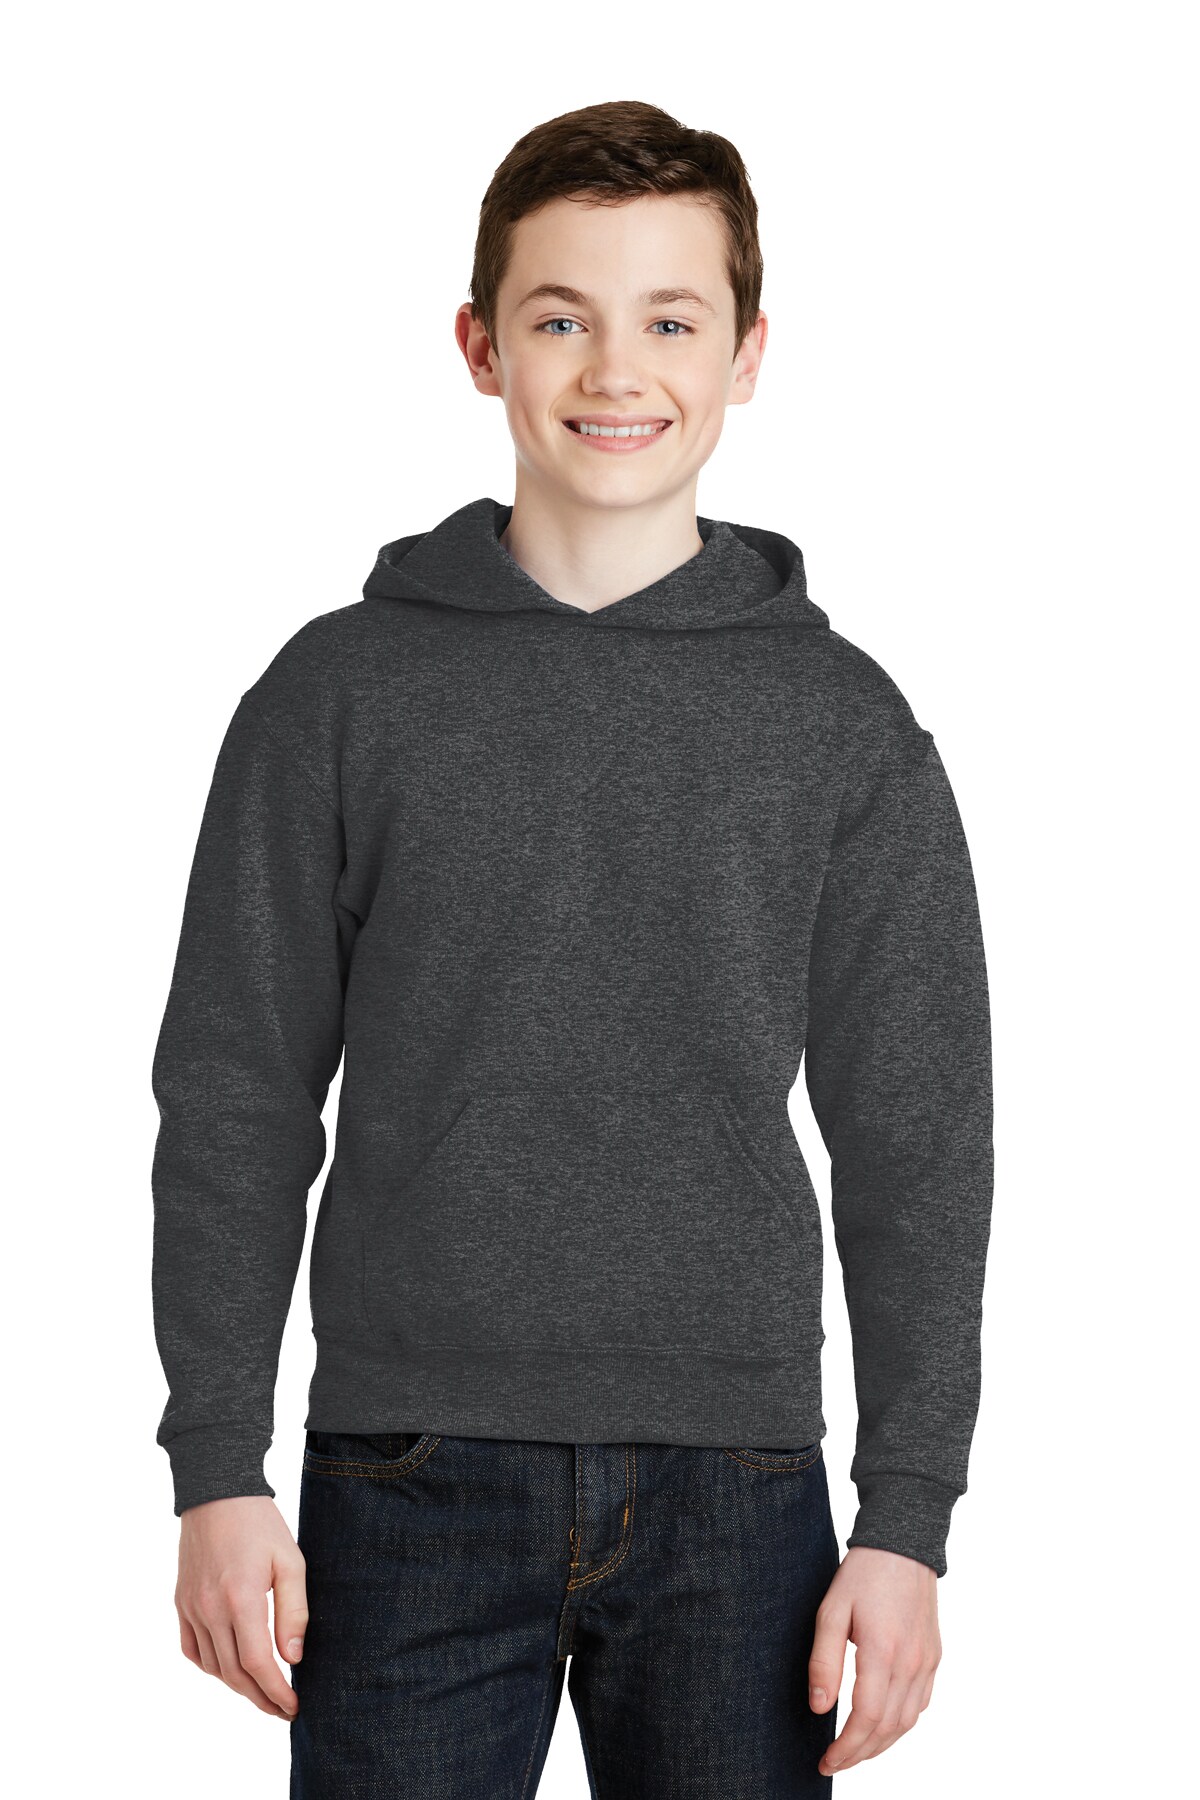 JERZEES® Youth Nublend Pullover Hooded Sweatshirt